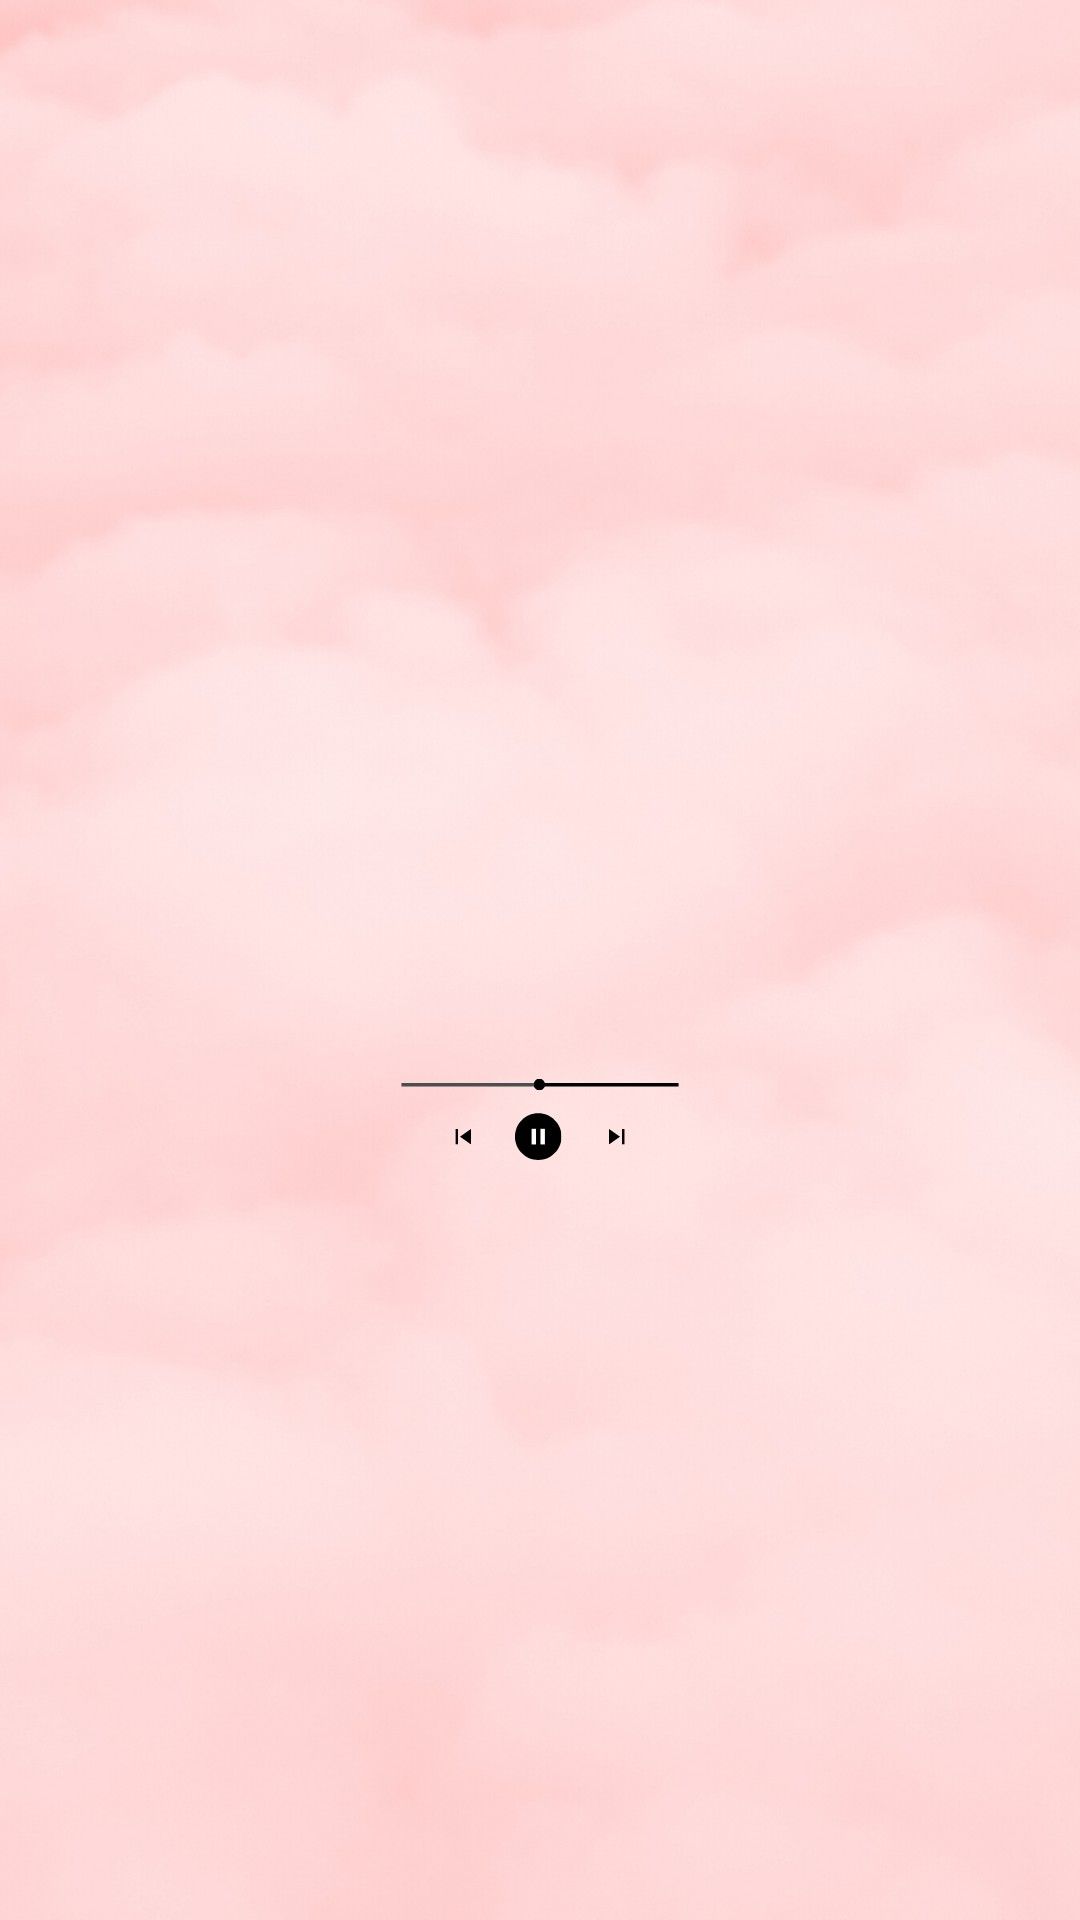  Handy Musik Hintergrundbild 1080x1920. sky #pastel #clouds #wallpaper #blue #pink #aesthetic #clean #music #player #wallpaper #pin. Pink wallpaper iphone, Pink music wallpaper, Cute tumblr wallpaper